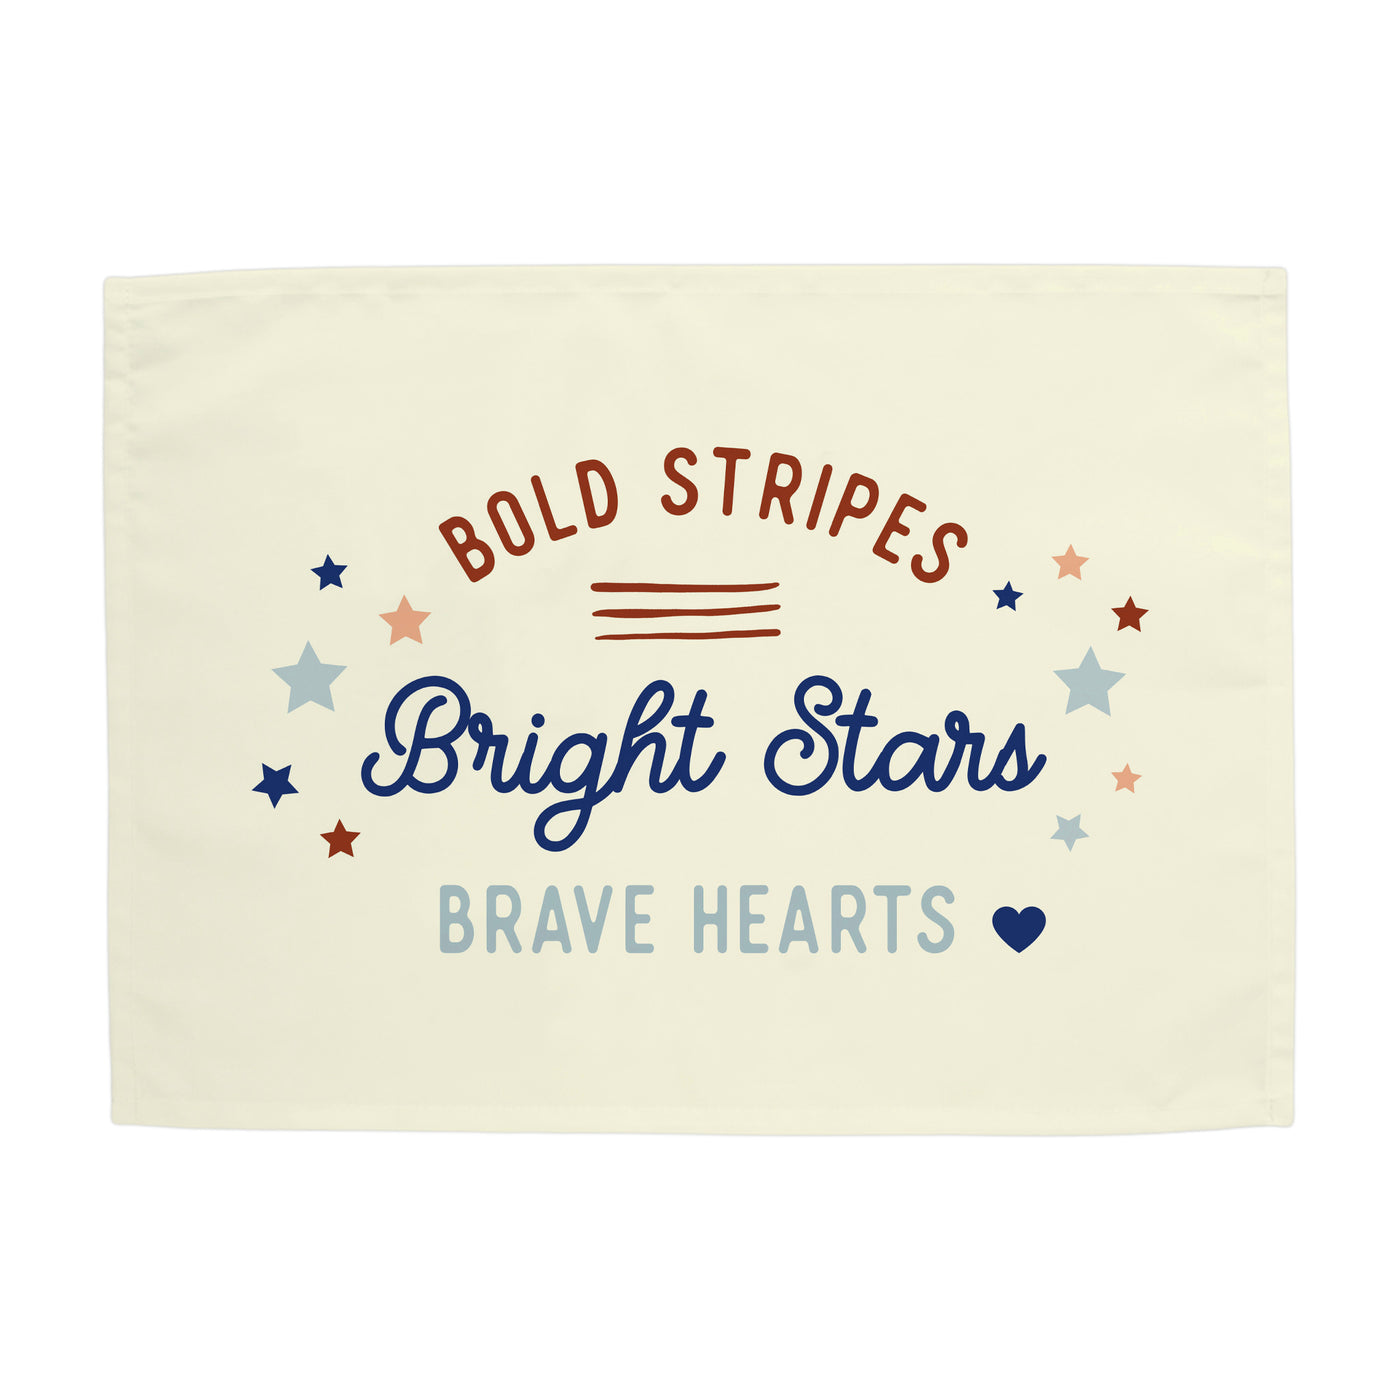 Bold Stripes Bright Hearts Brave Hearts Banner